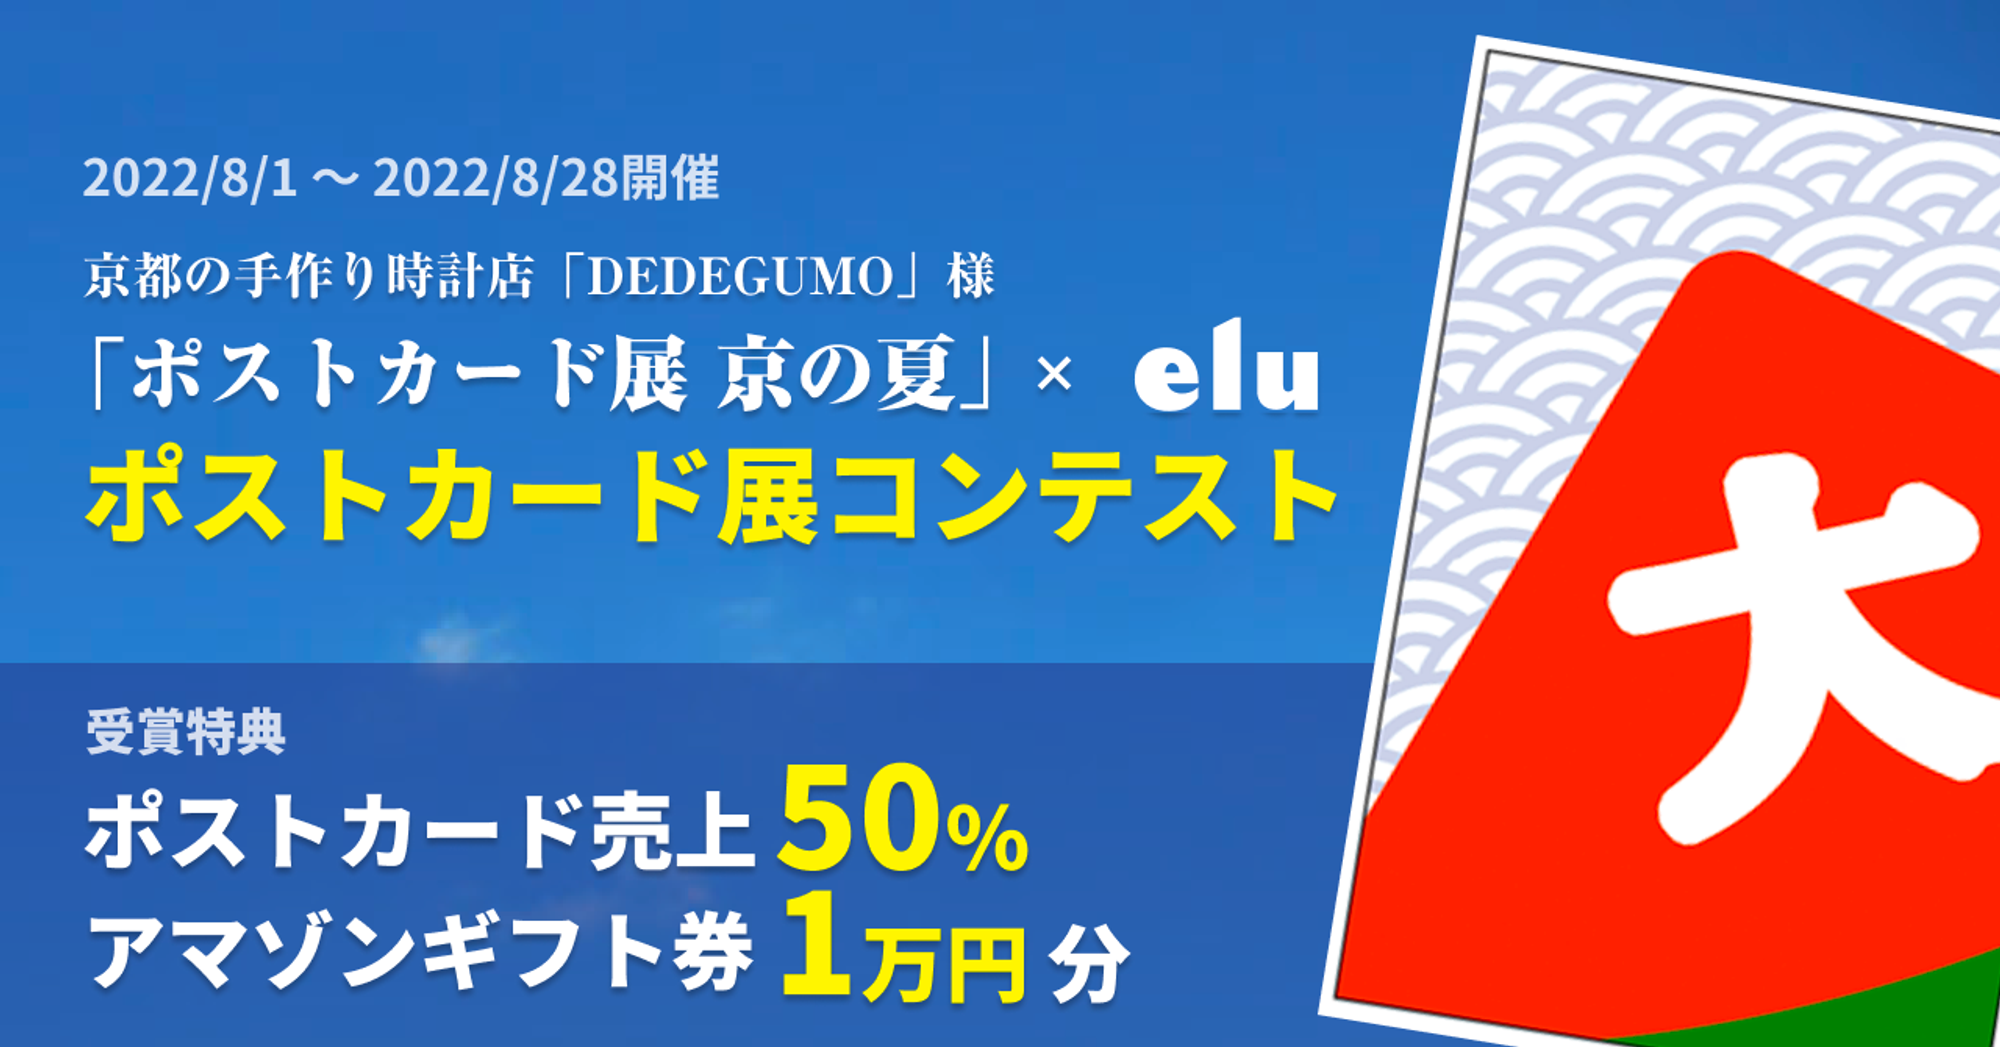 DEDEGUMO ポストカード展「京の夏」× elu
https://record.jp/elu_contest_dedegumo_summer_22